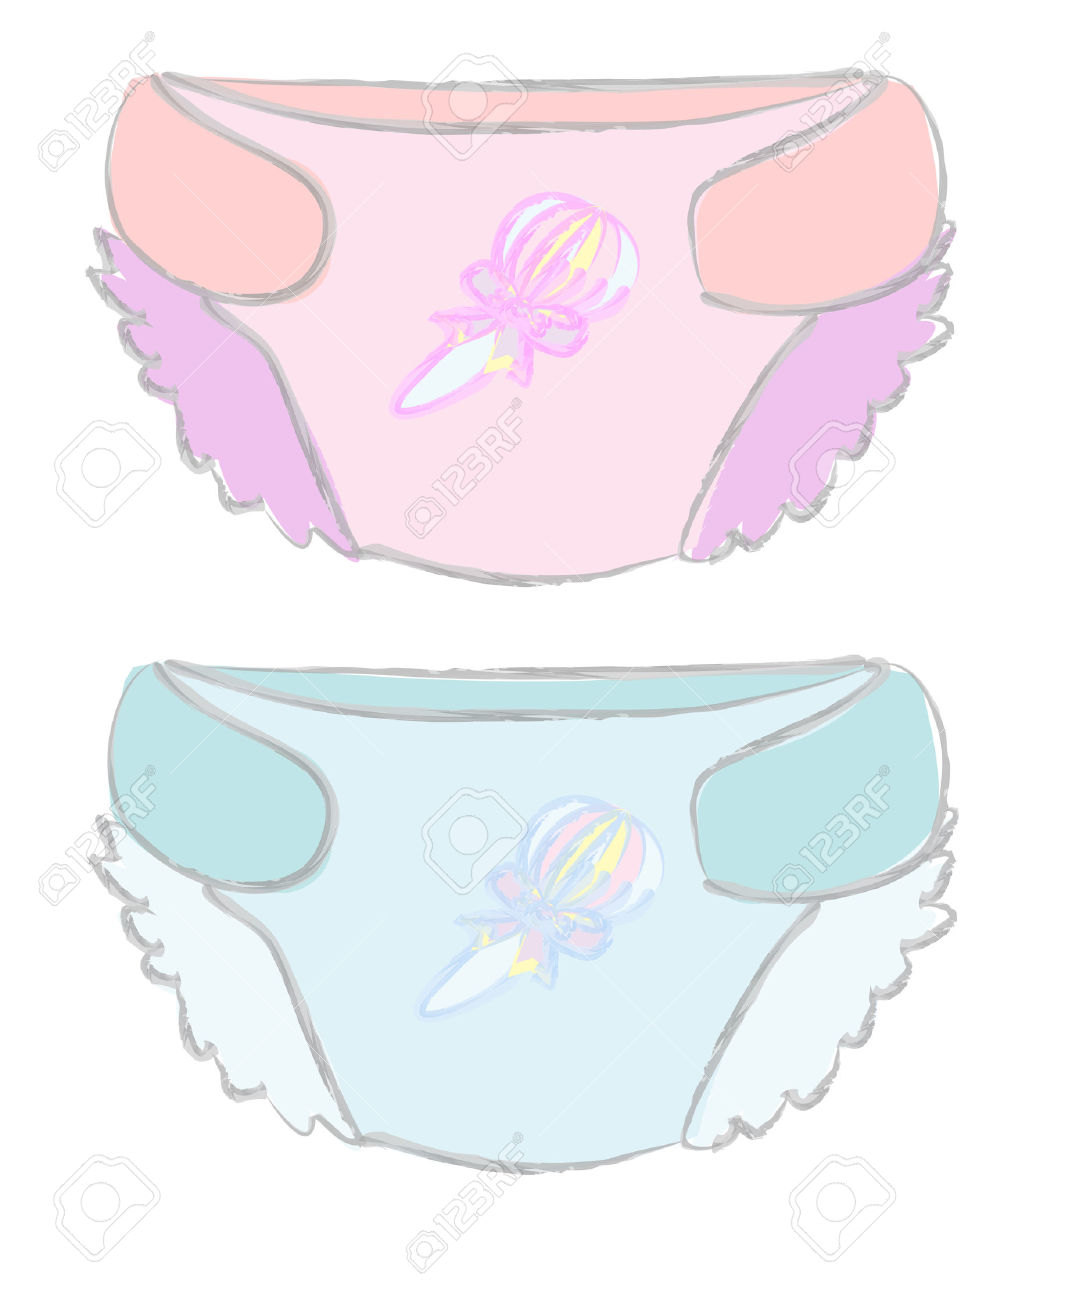 Baby diaper bag clip art diaper stock vector illustration and